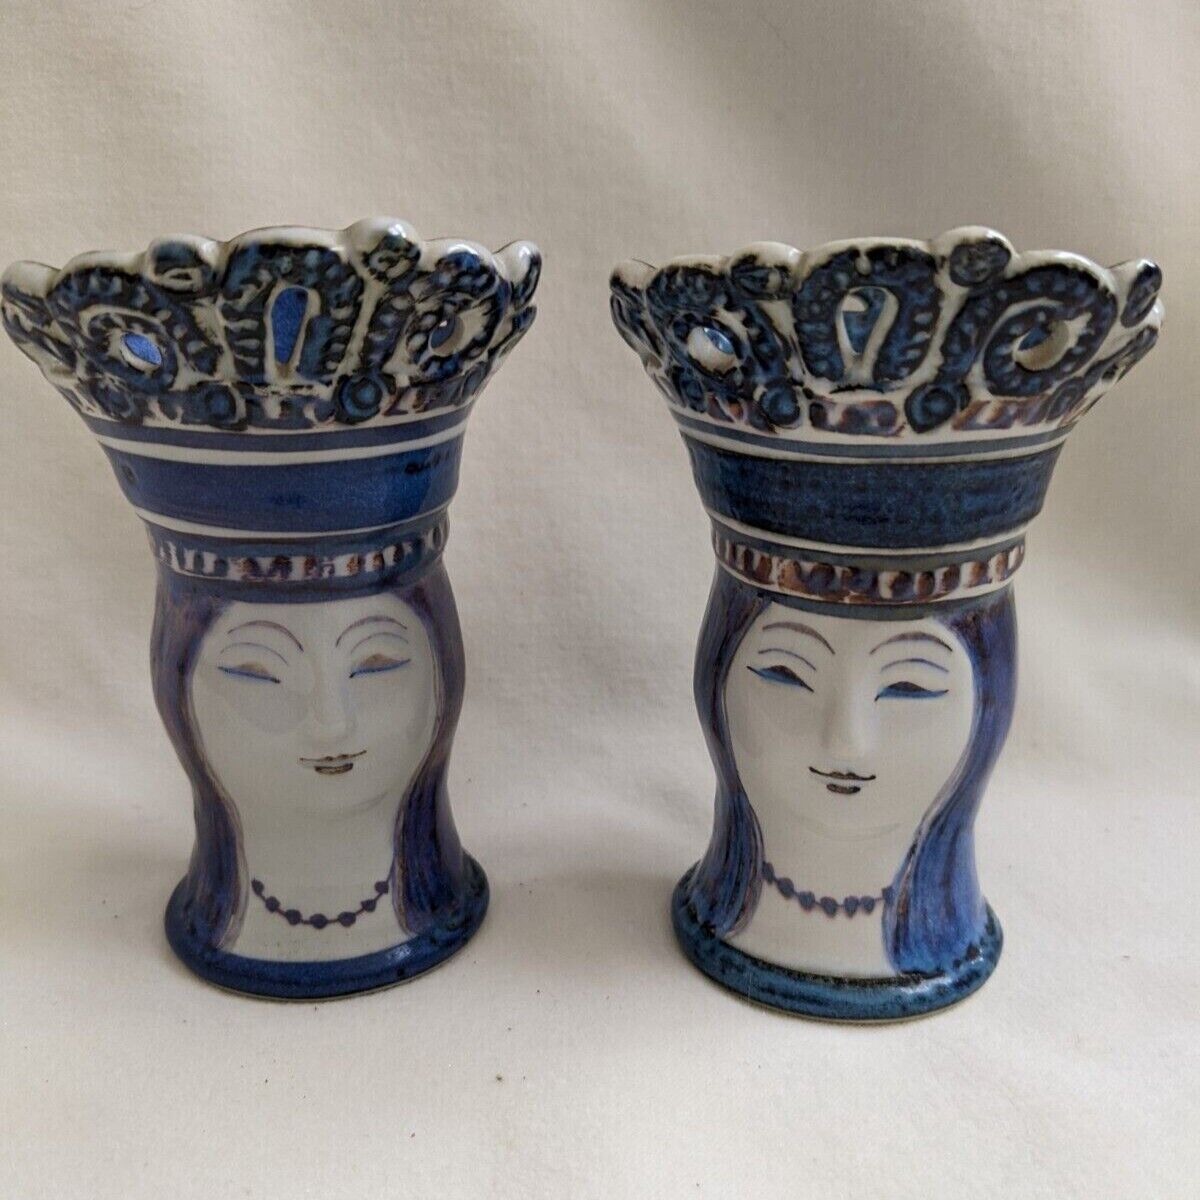 2 Vtg Royal Copenhagen Queens Figurine Vase Denmark Doreen Middelboe numbered